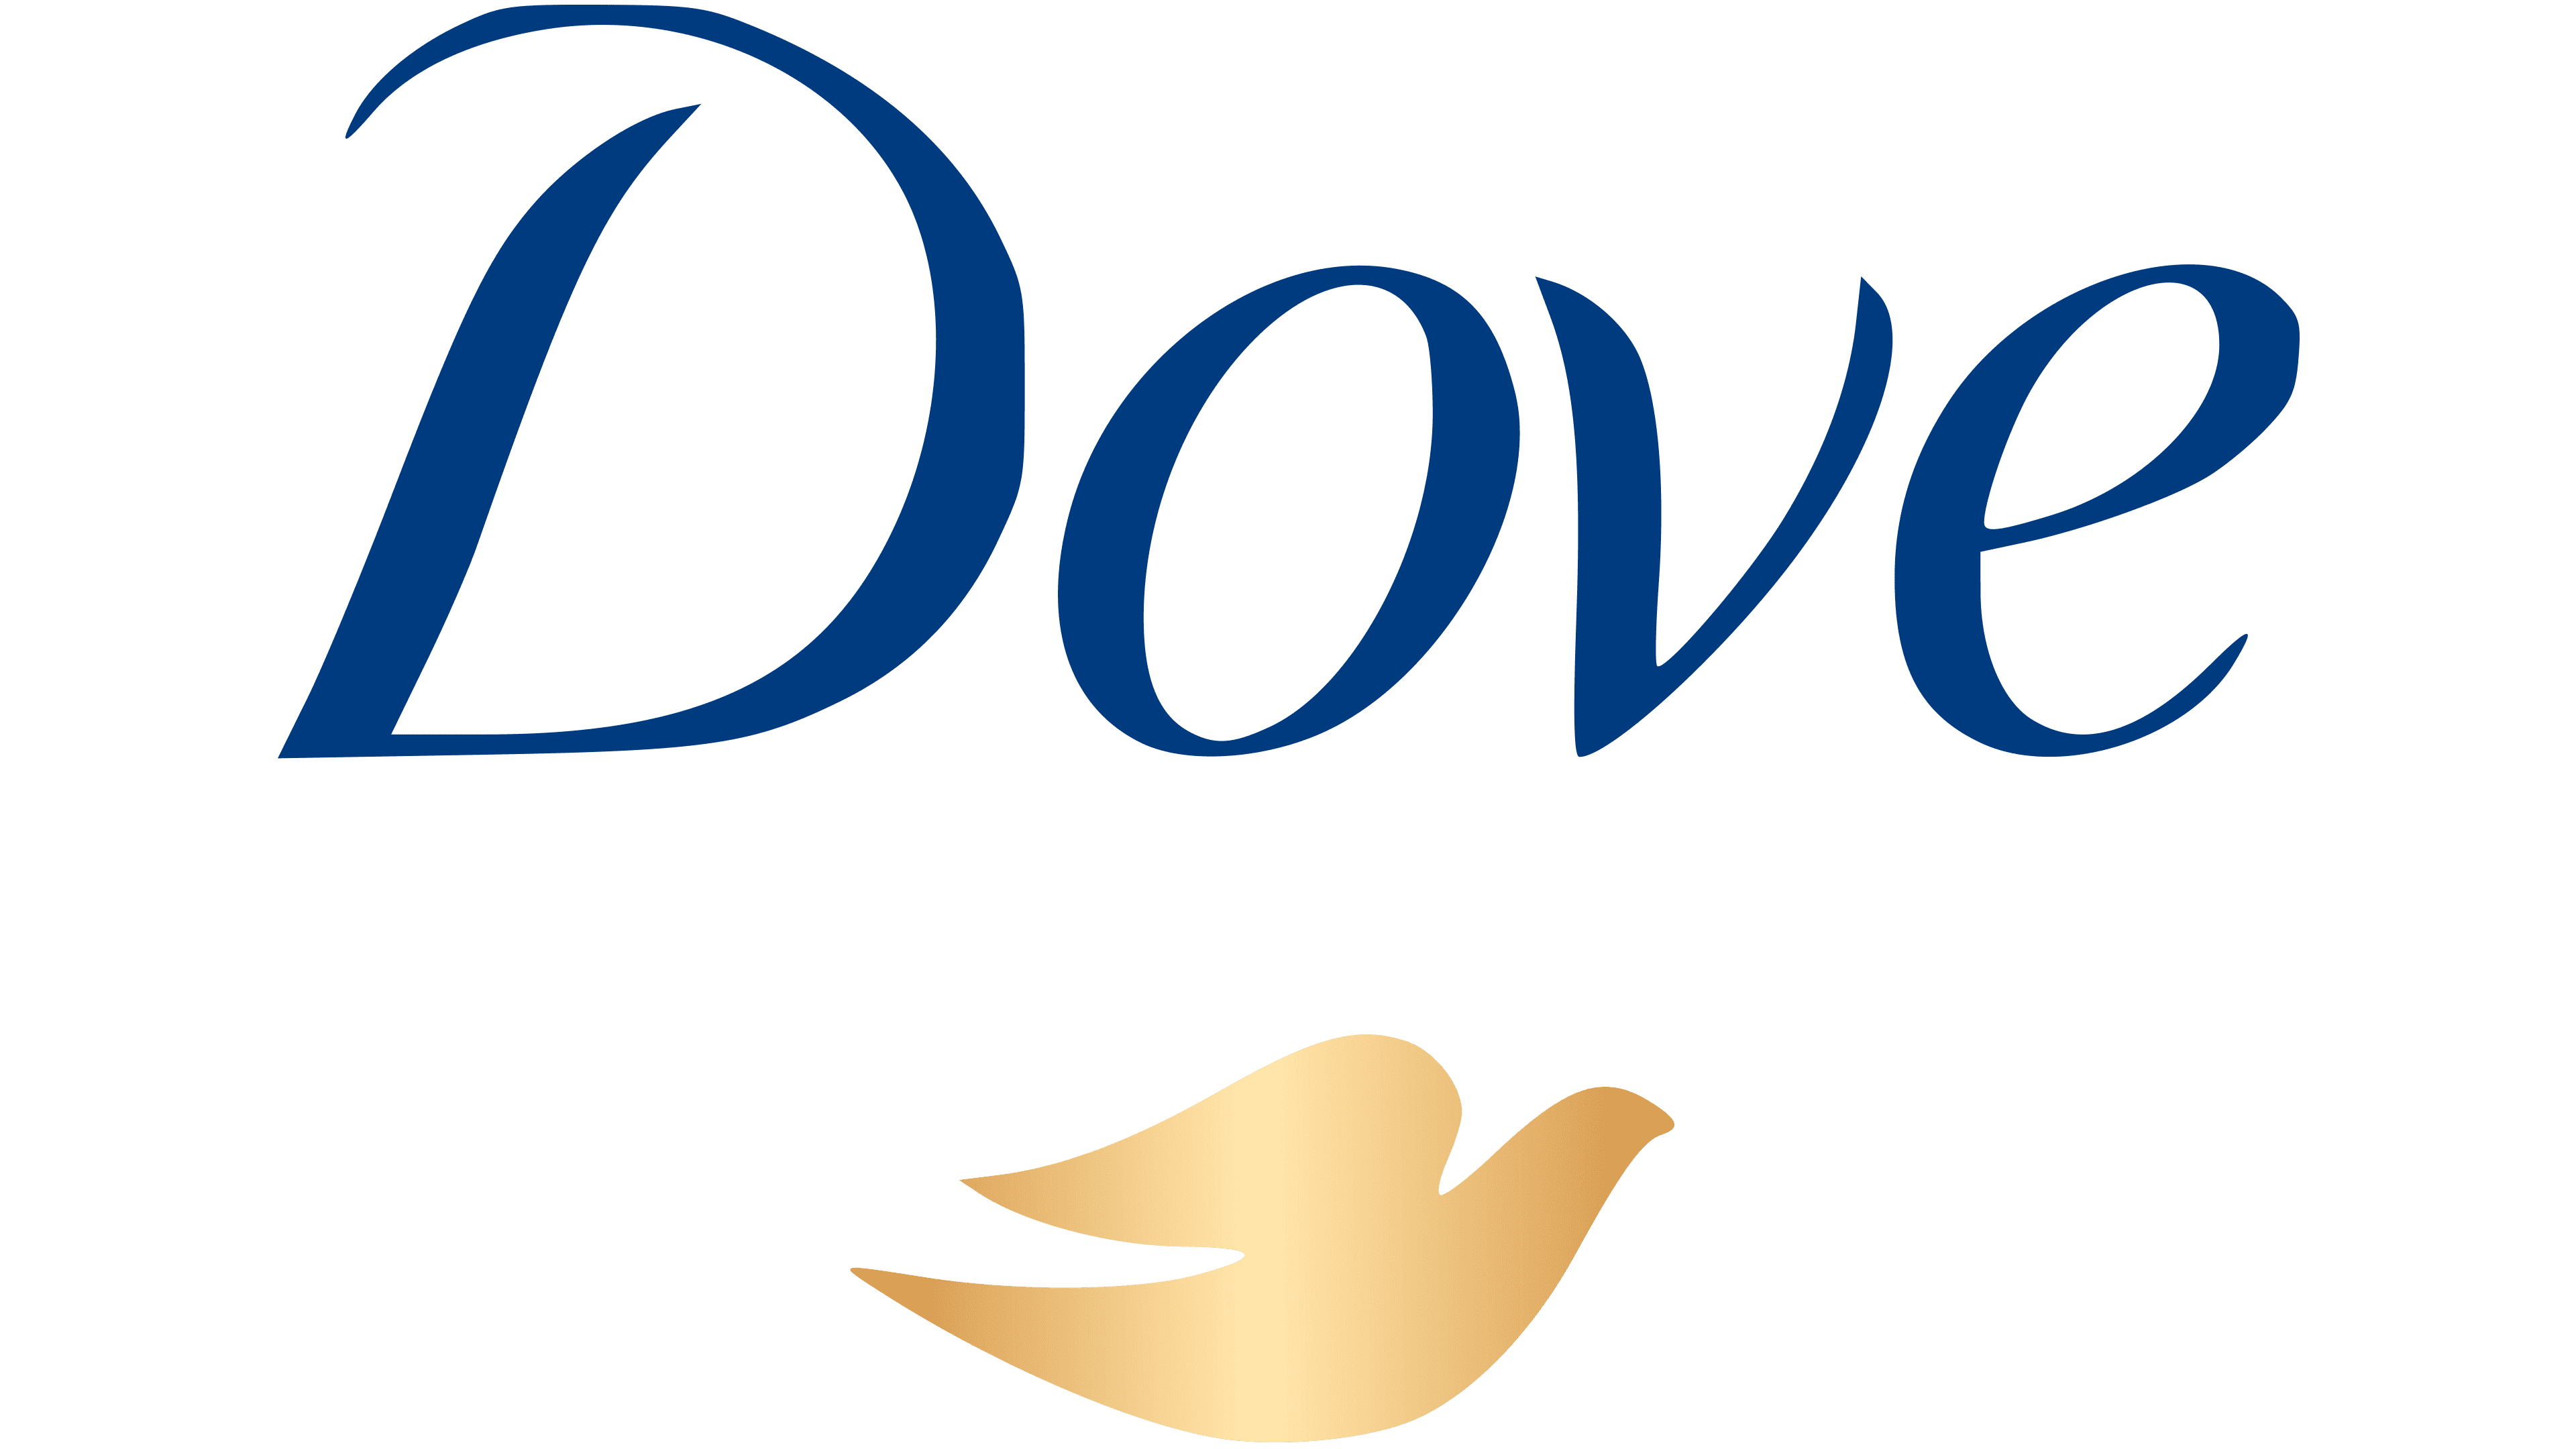 Dove-Logo